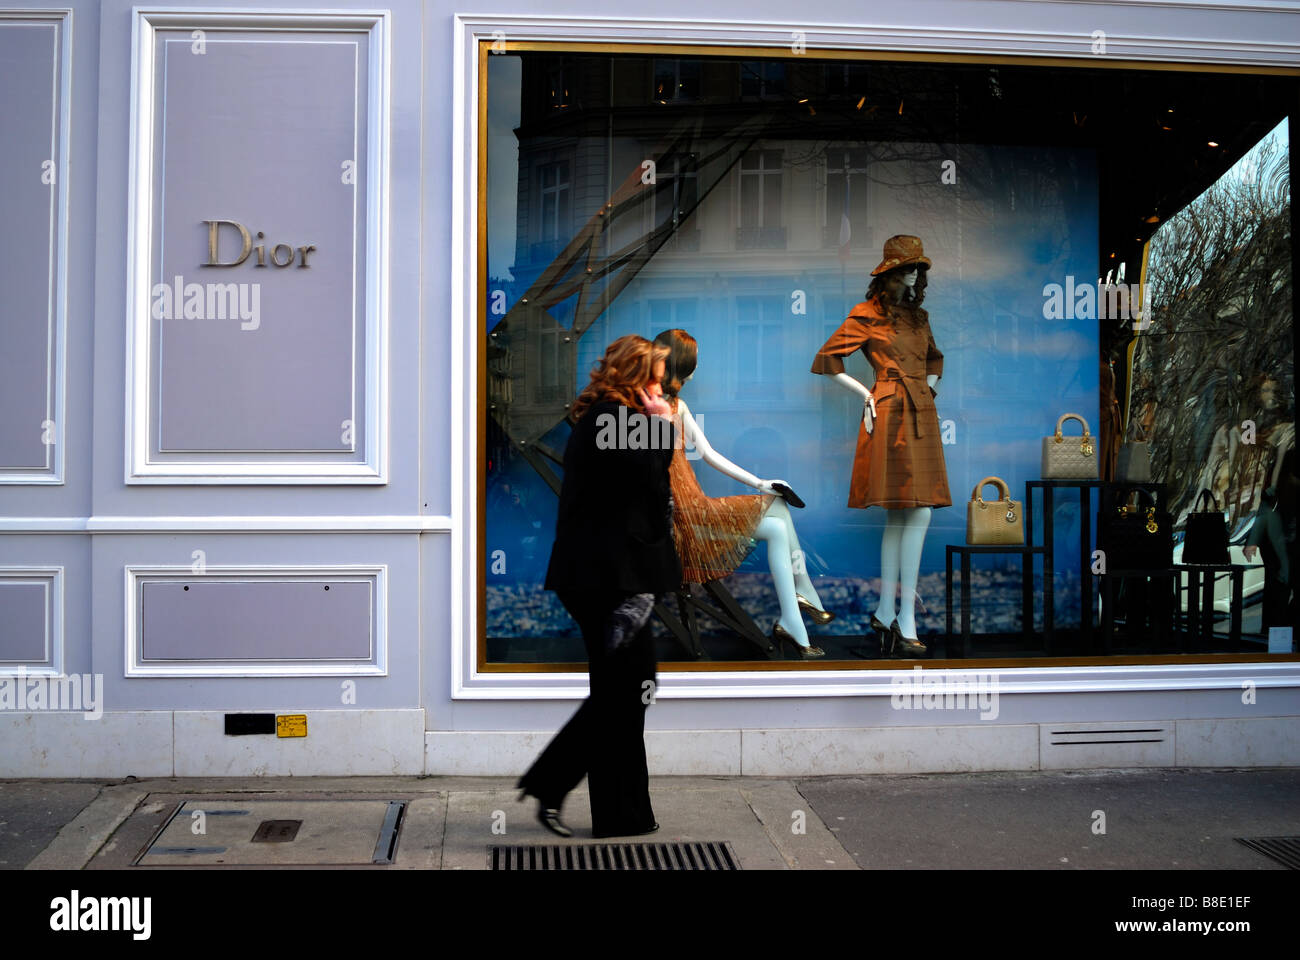 Paris, France, Luxury Window Shopping, Boutique 'Christian Dior' Store front, Woman Shopper, Walking ,Talking on Cellphone, fashion textile mannequin, Stock Photo